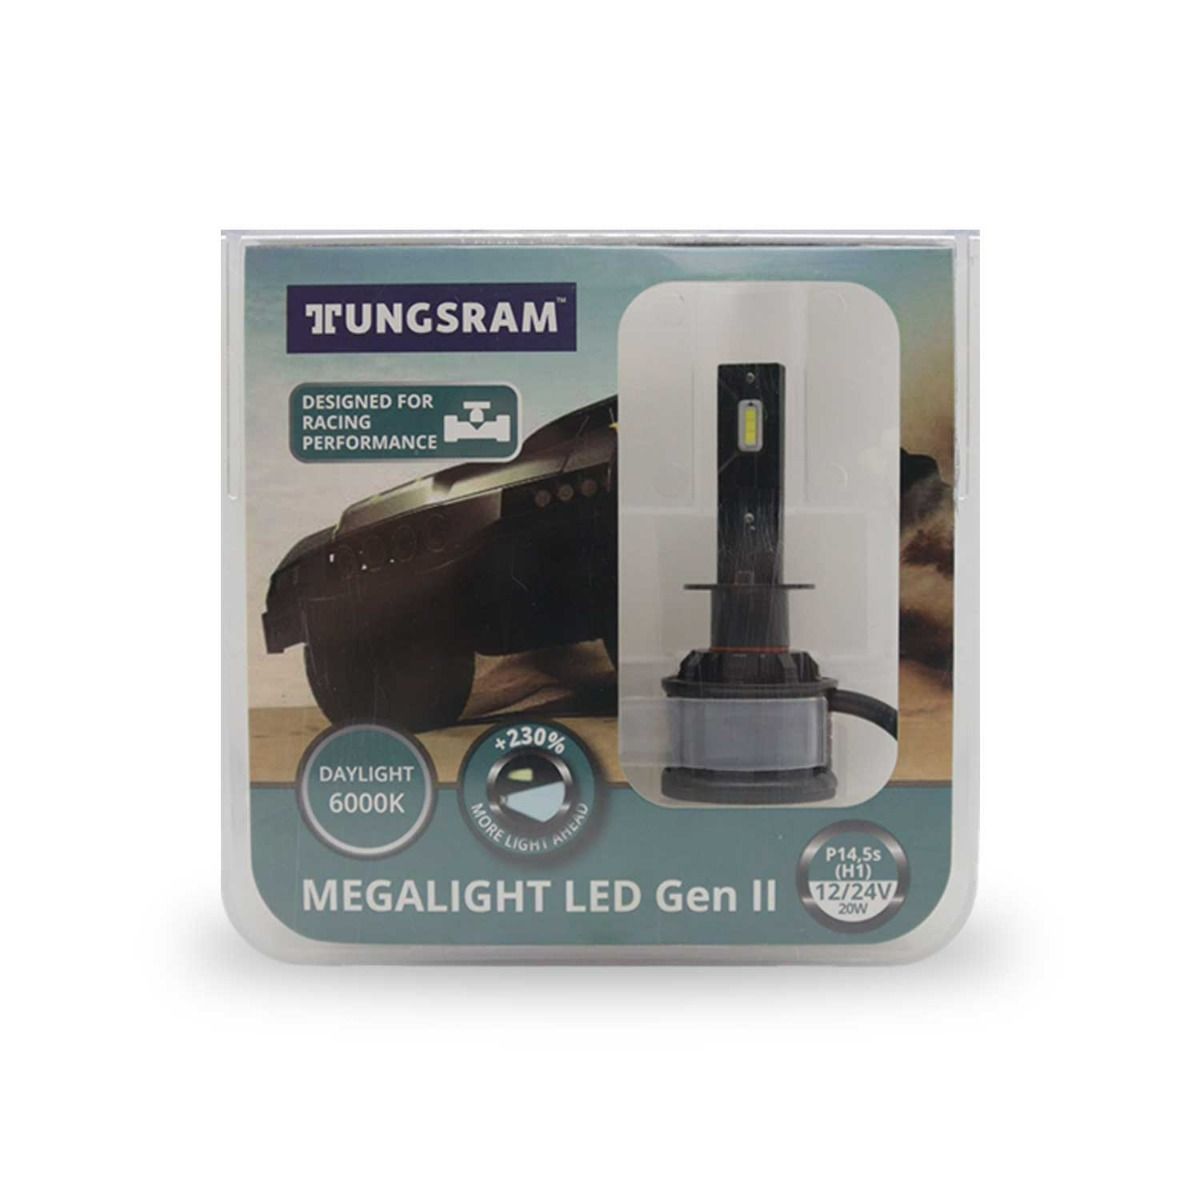 Tungsram Megalight 6000K LED Headlight Lamp, HB3/HB4/61440, 12V